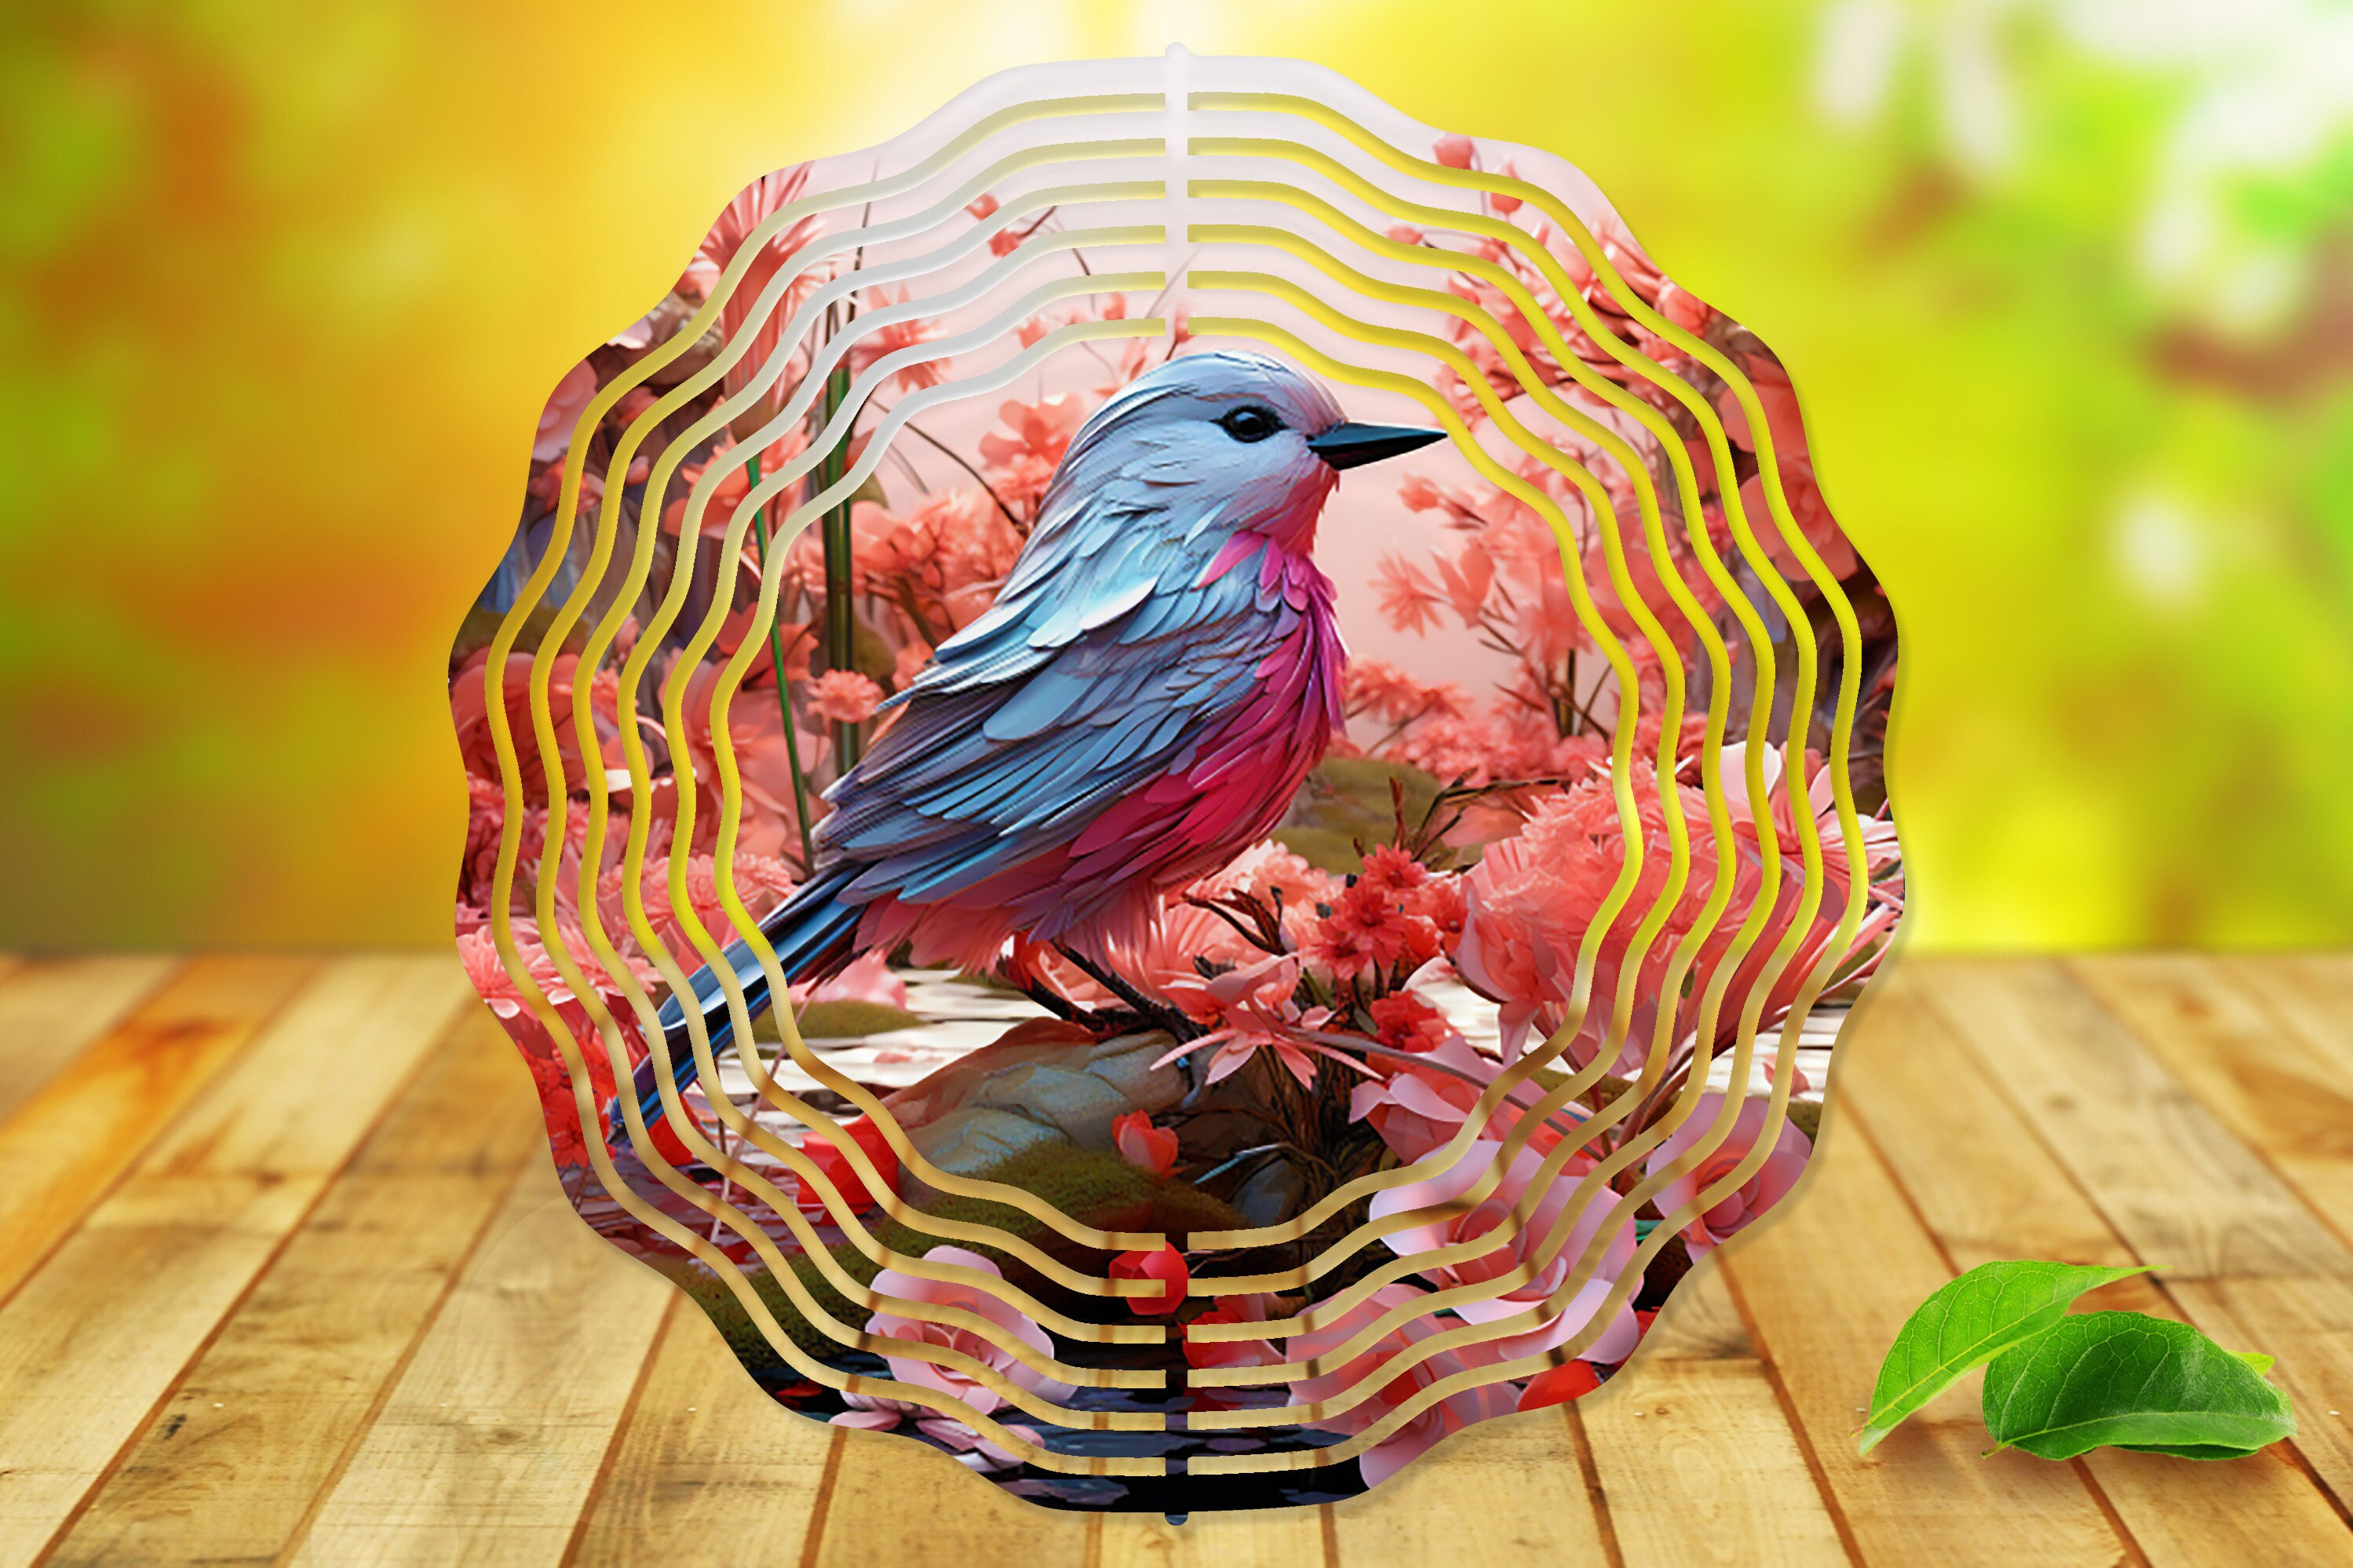 3D Bird And Flowers Wind Spinner For Yard And Garden, Outdoor Garden Yard Decoration, Garden Decor, Chime Art Gift